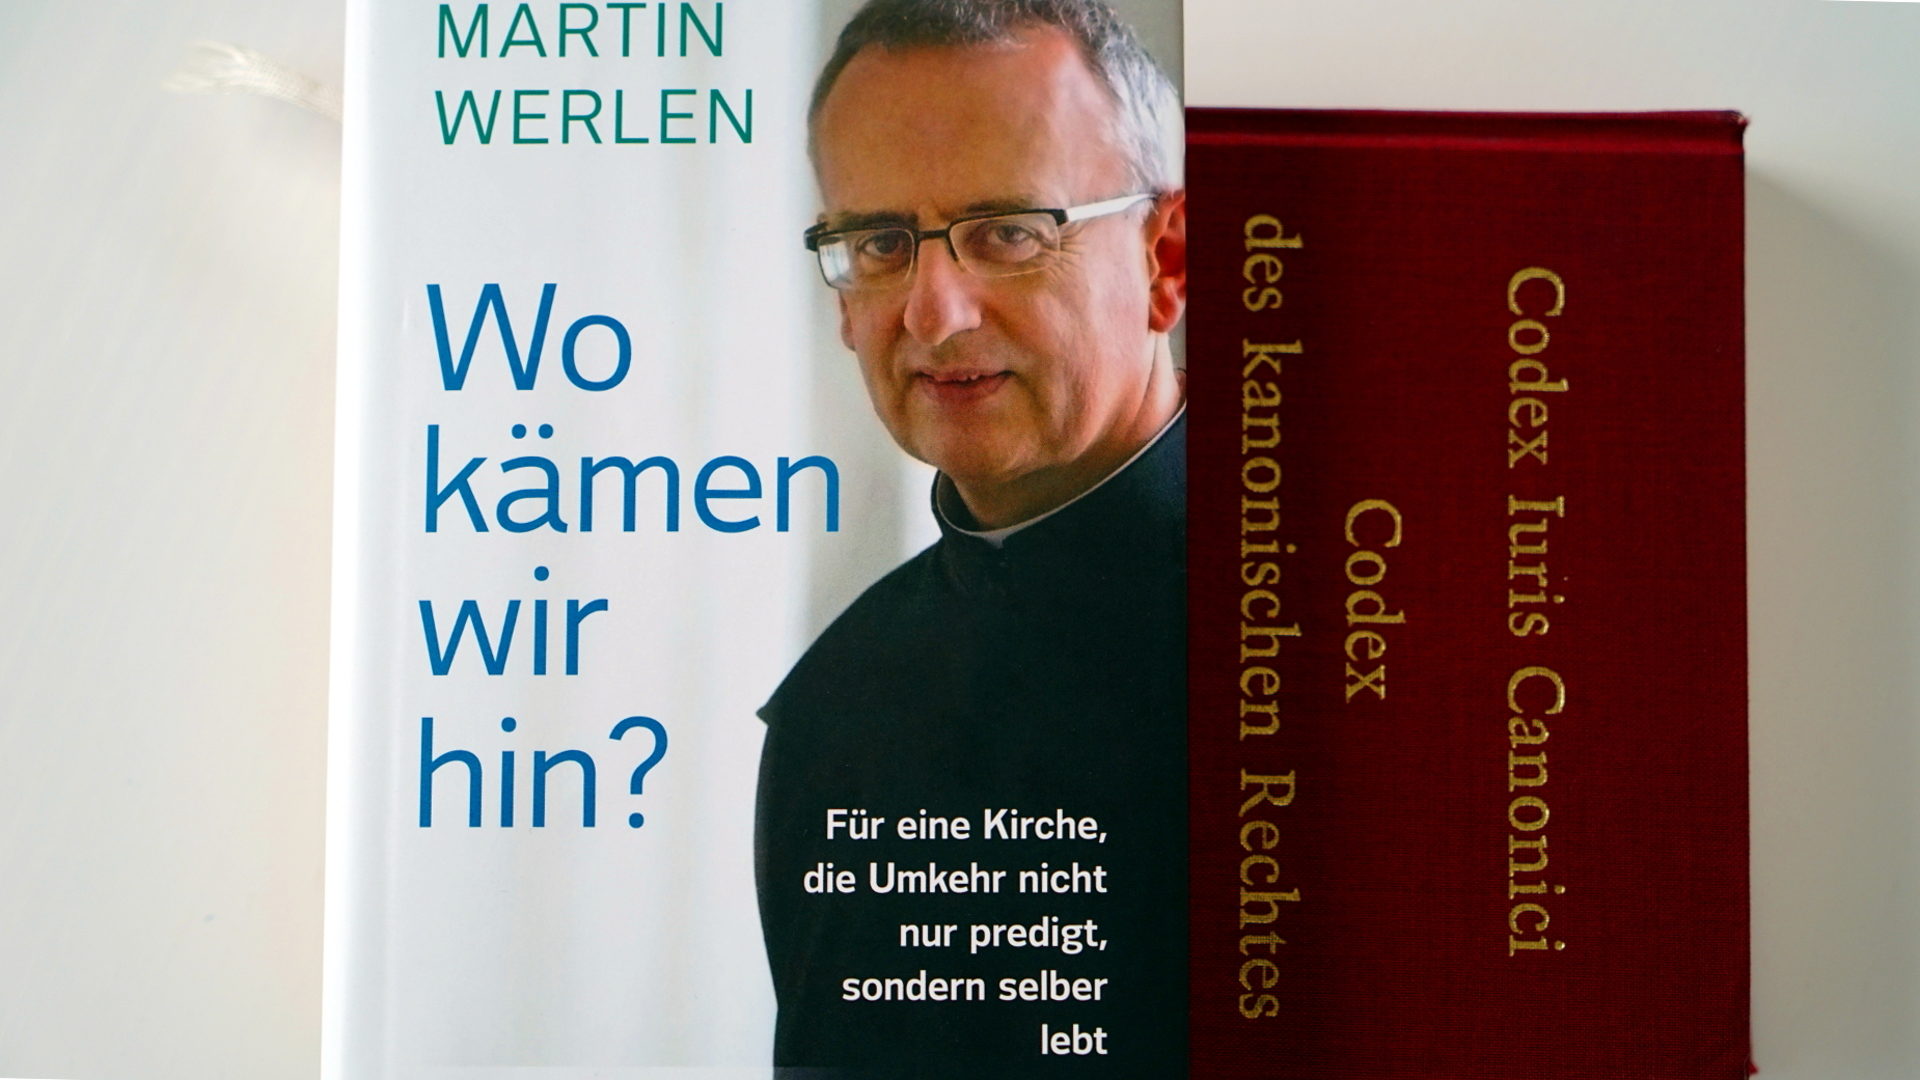 Martin Werlen - "Wo kämen wir hin?"